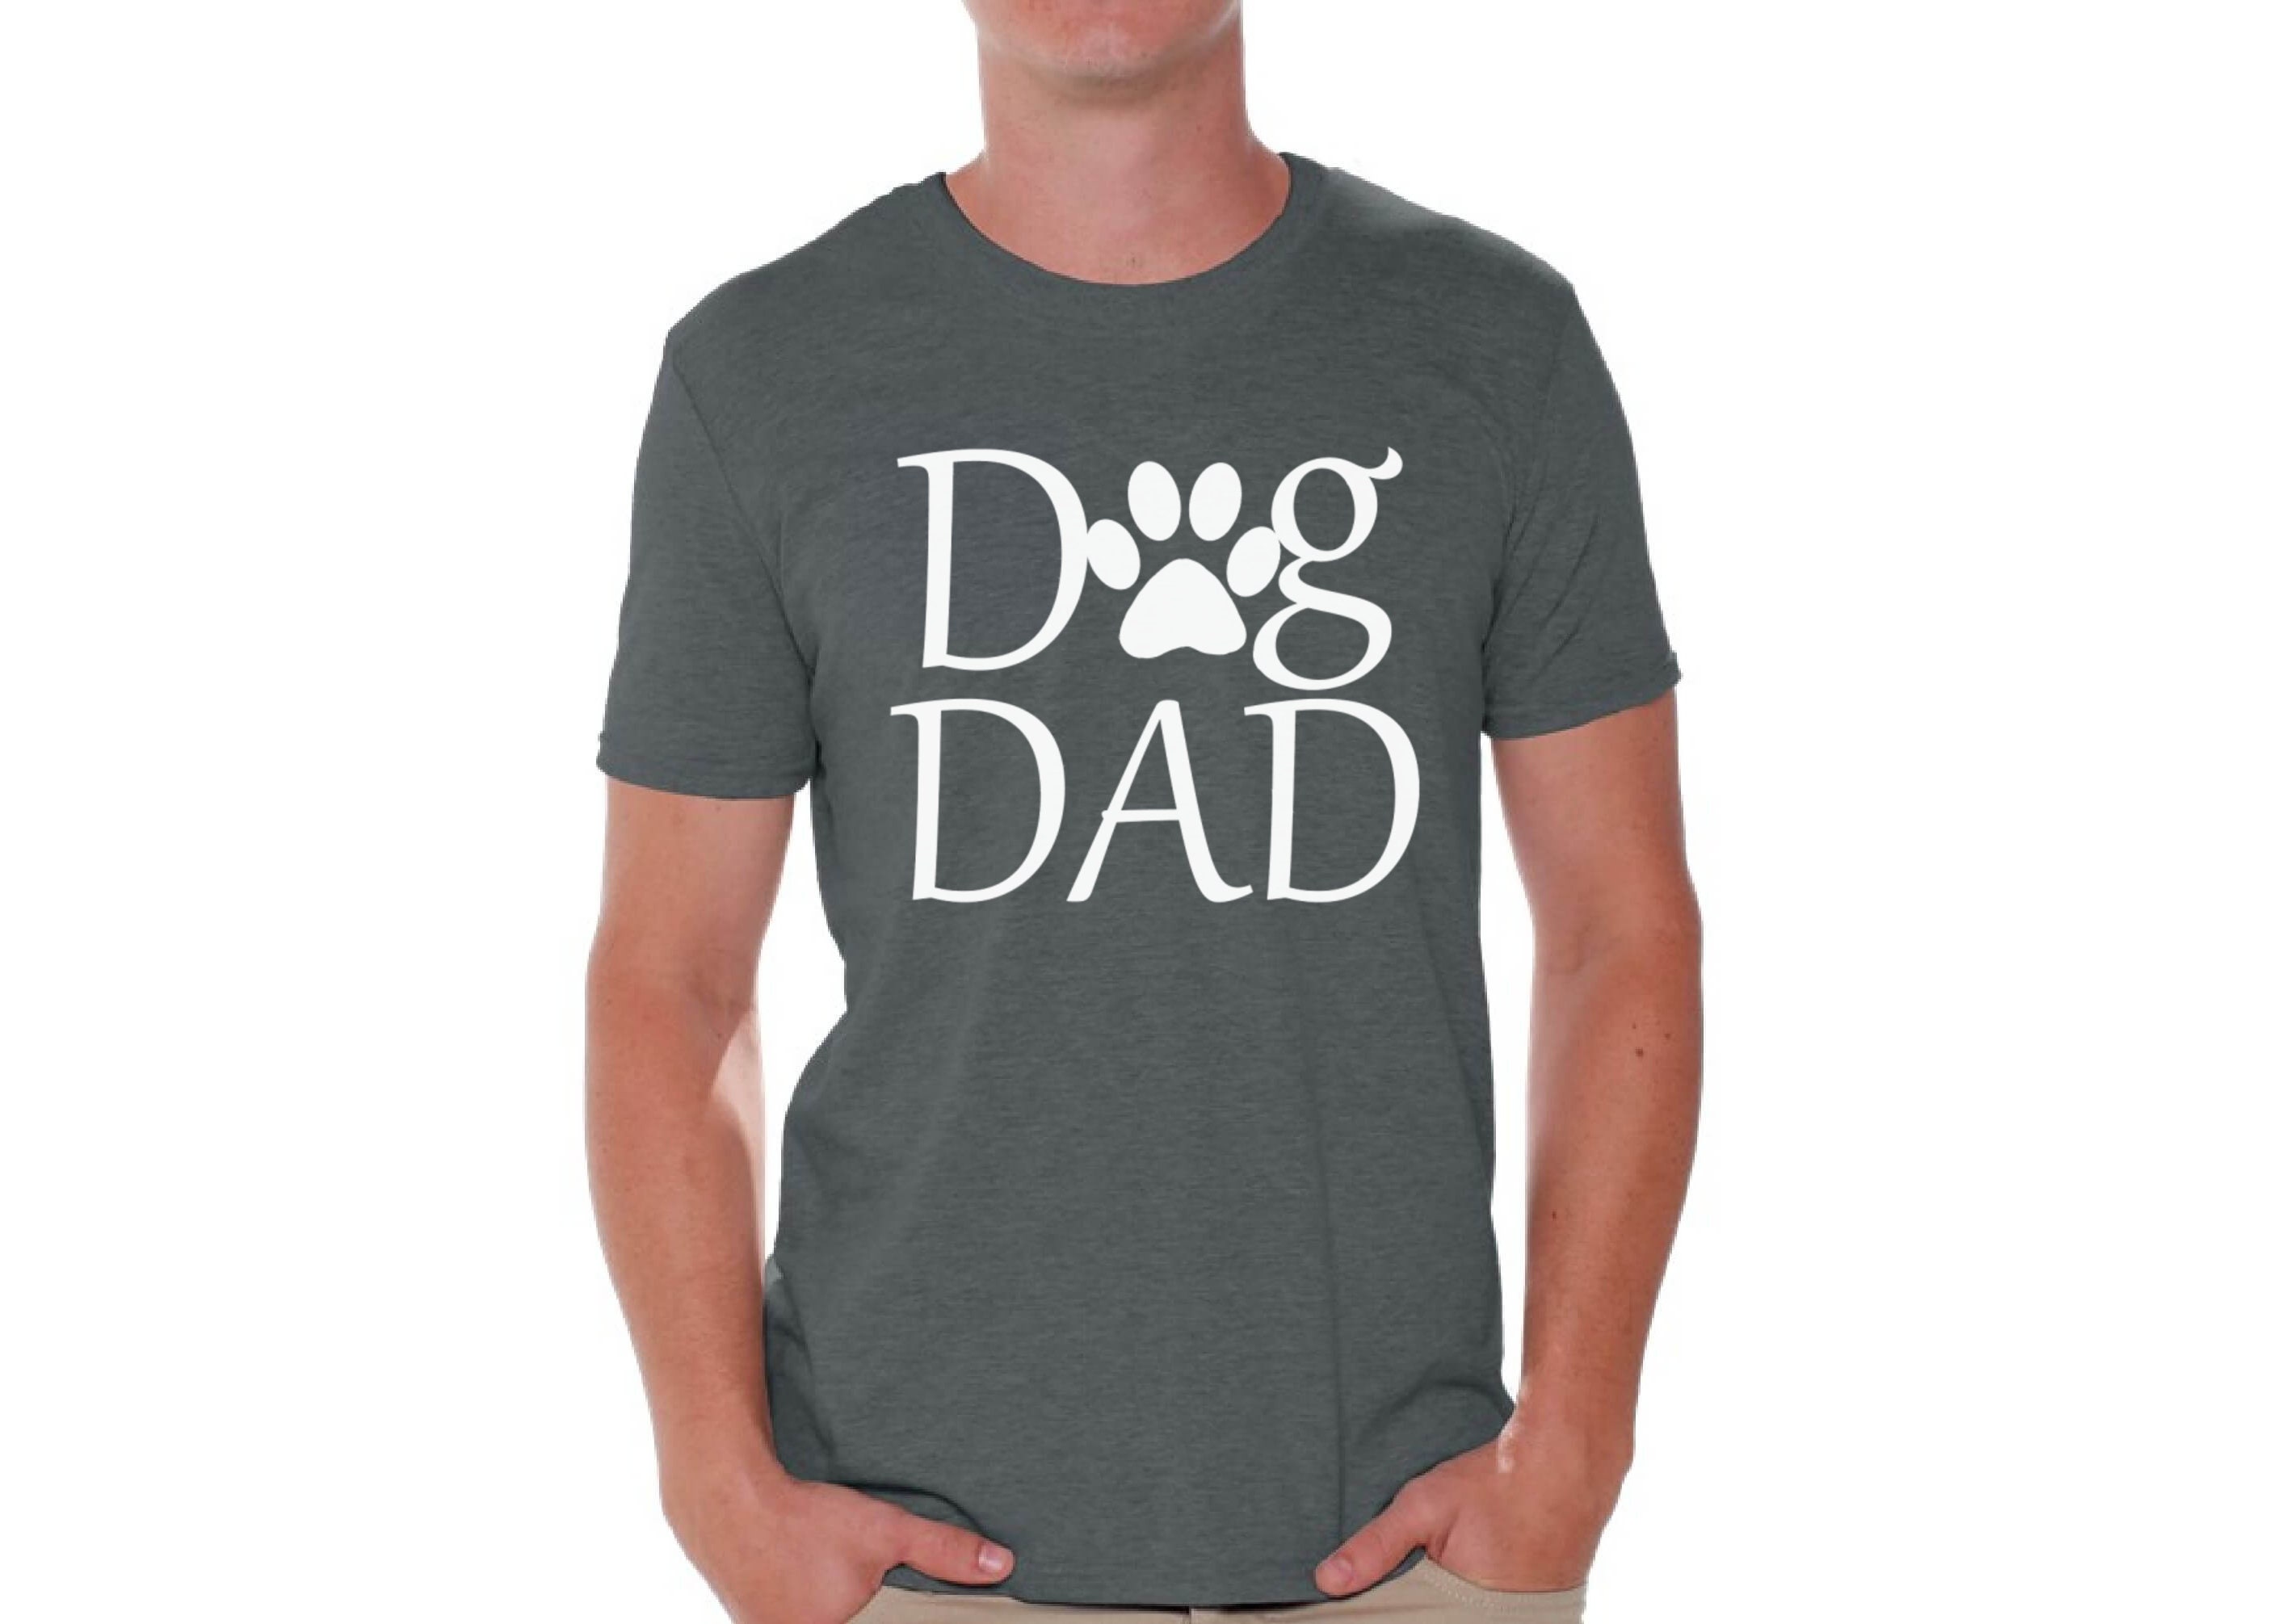 Daddy dog. Dog dad футболка. Футболка Cats Club. Мужская футболка best dad ever.